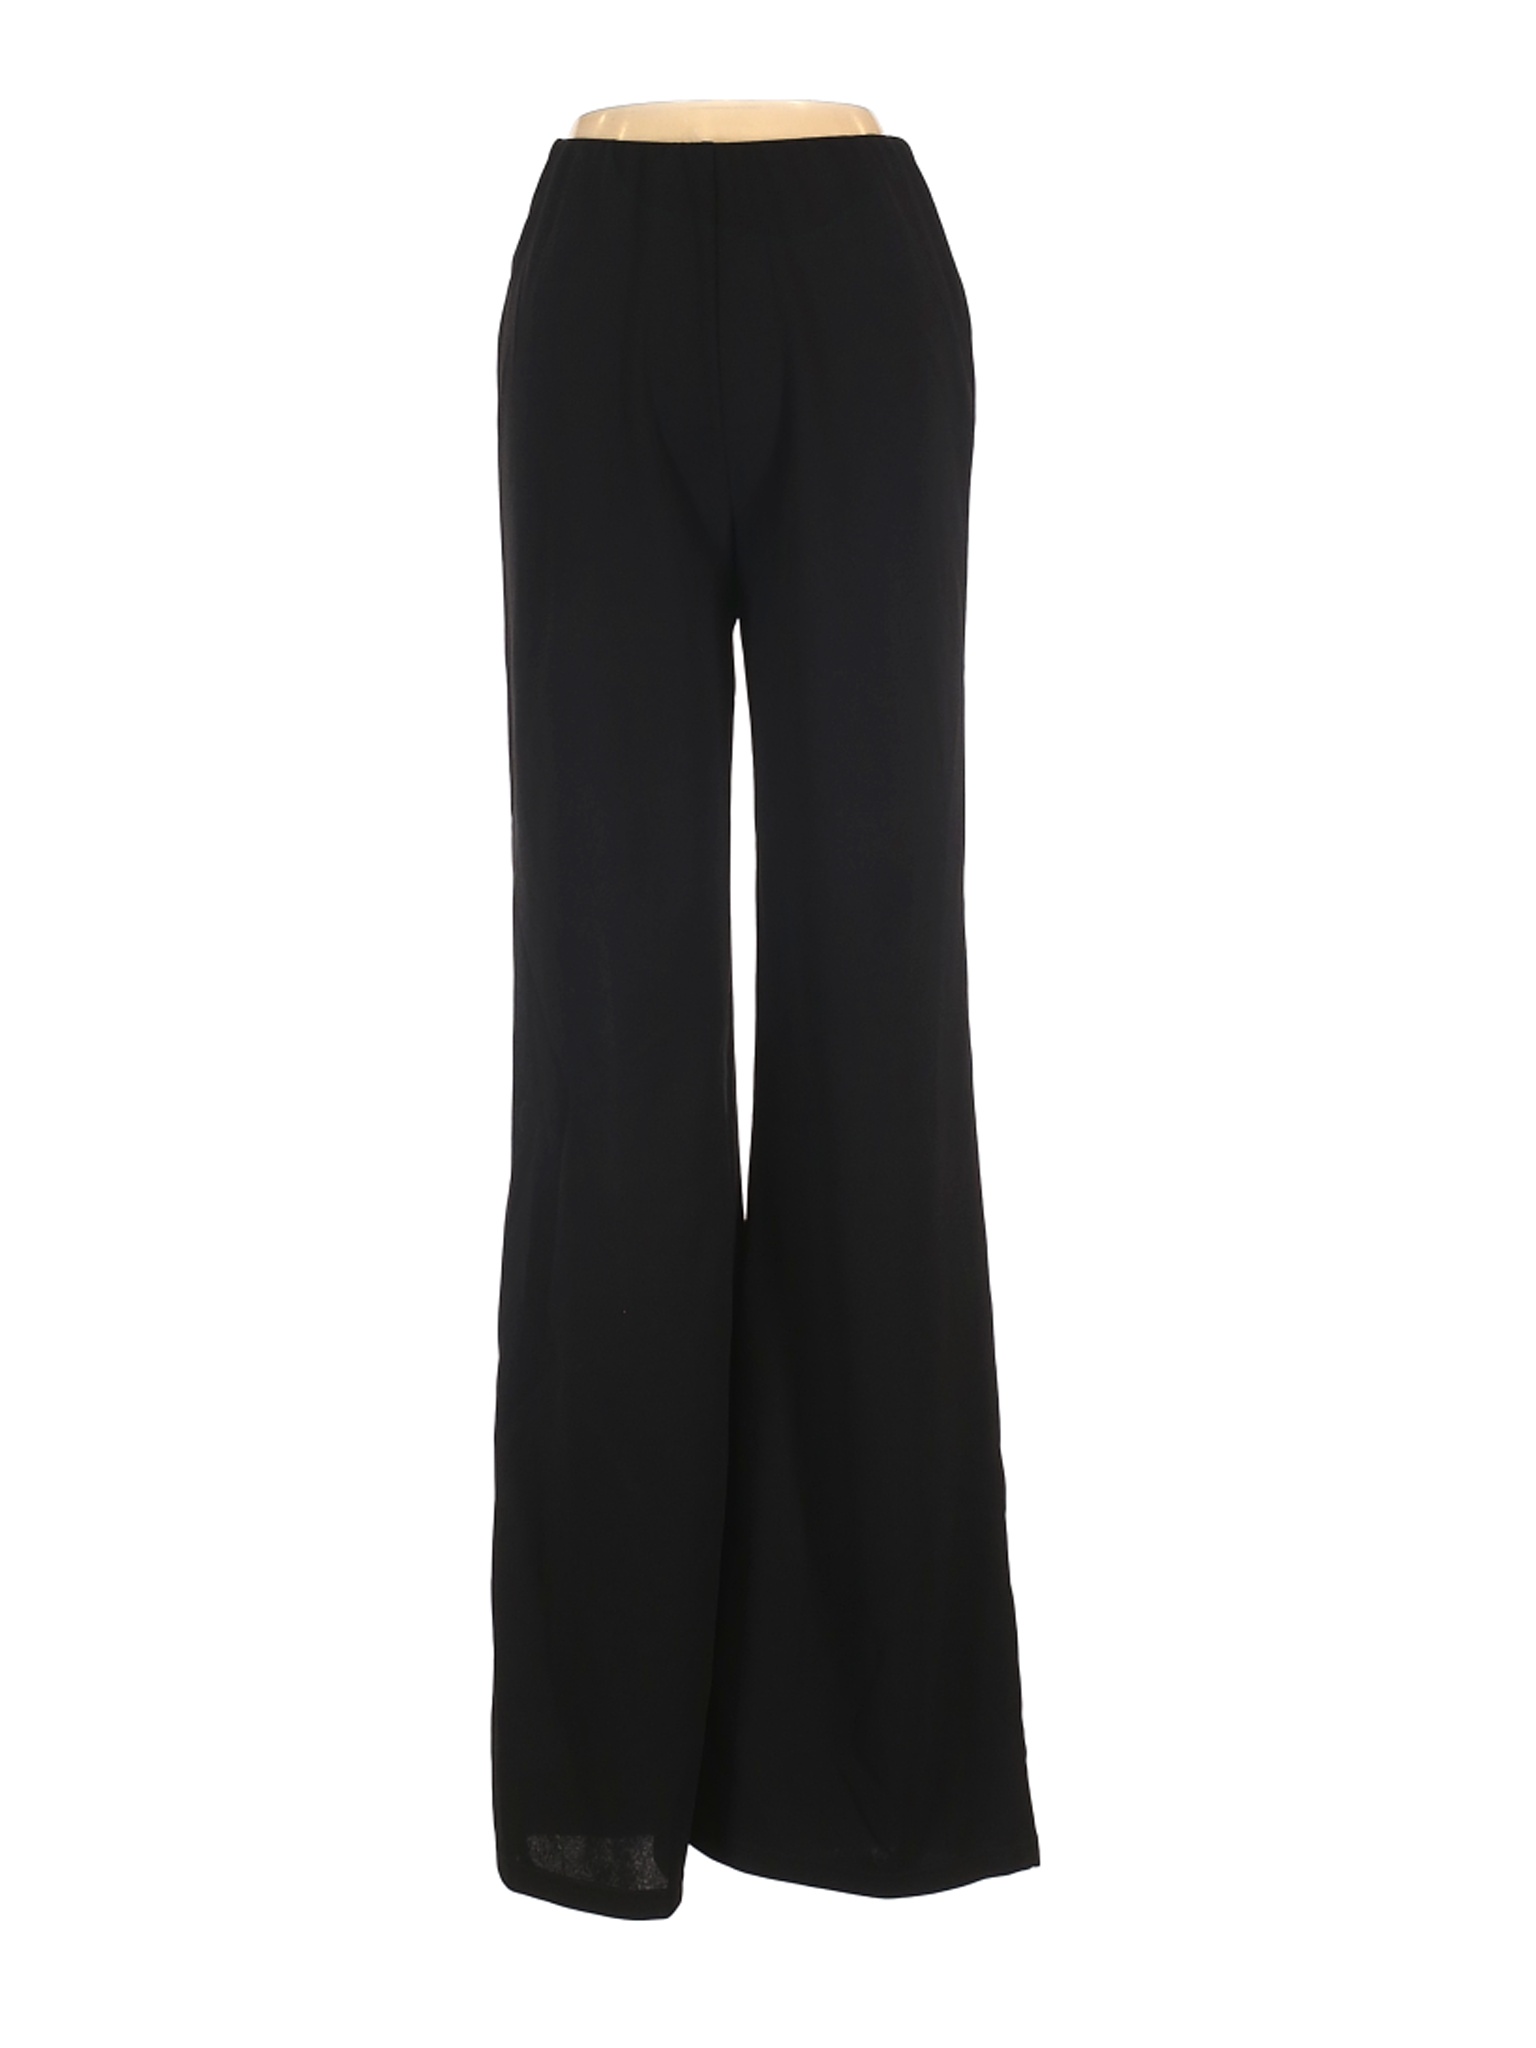 Shein Women Black Casual Pants M | eBay